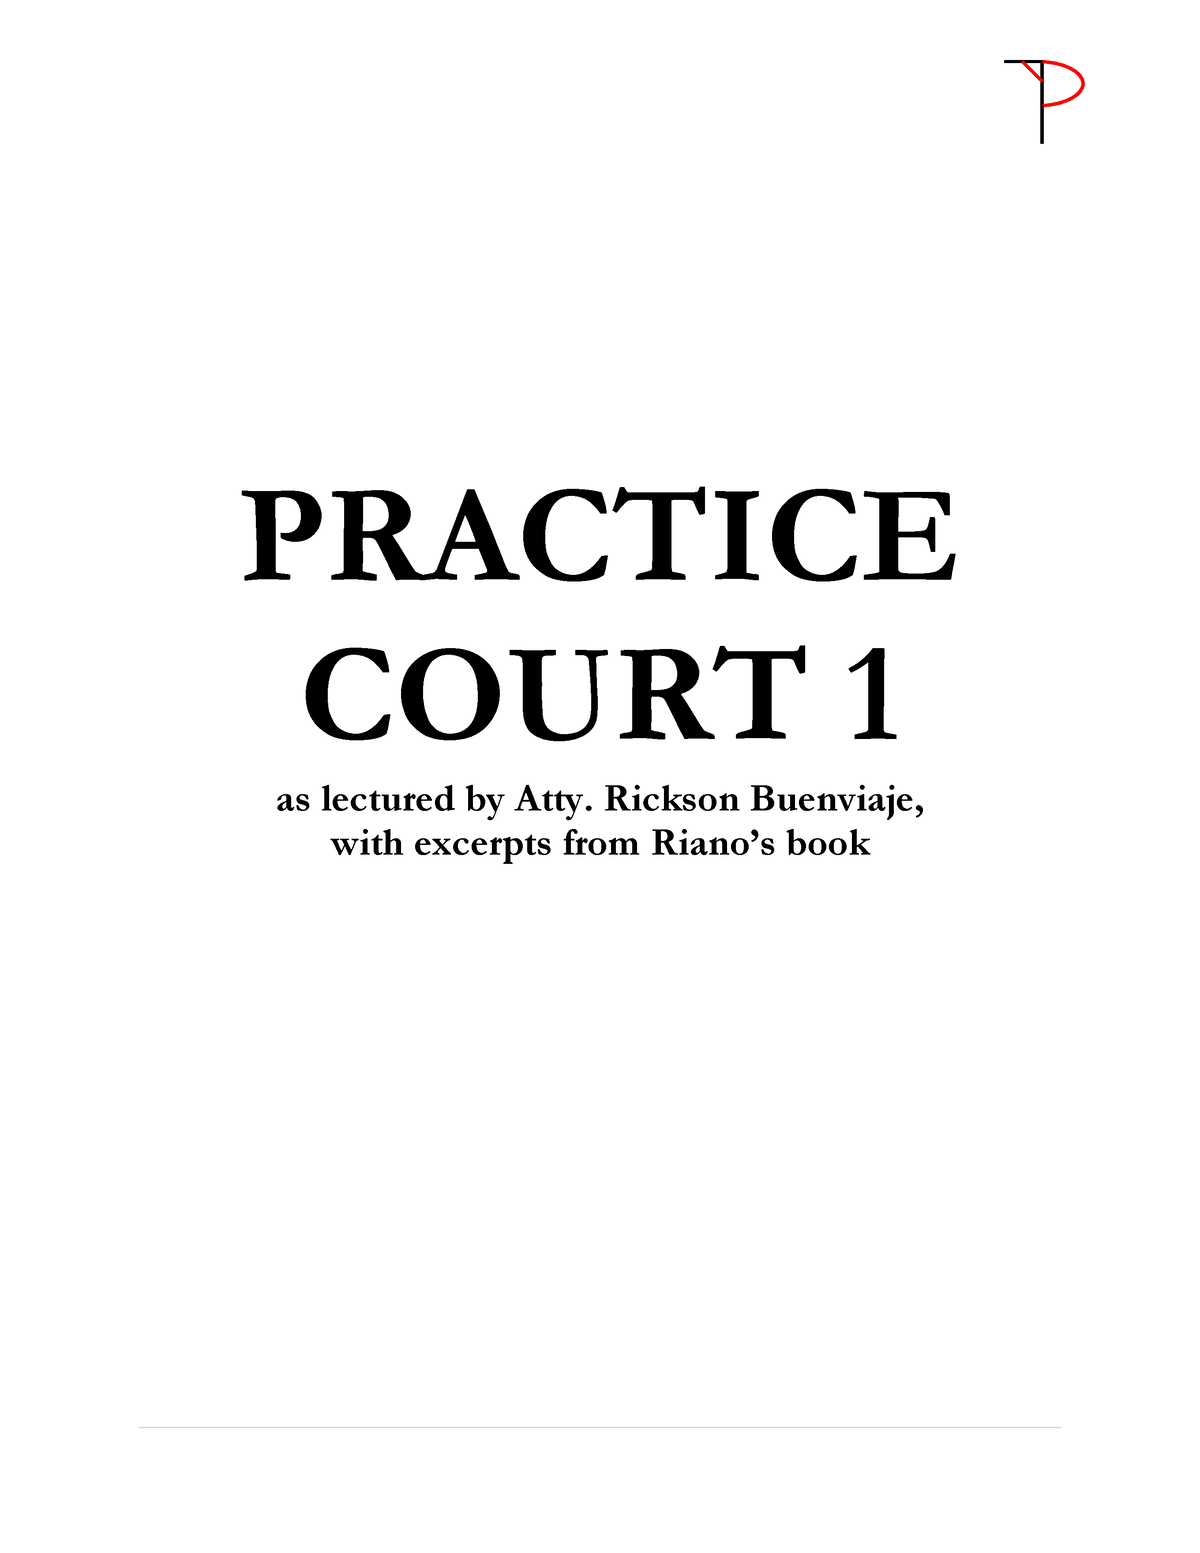 Practice Court I Atty Rickson Buenviaje PJA PRACTICE COURT 1 as